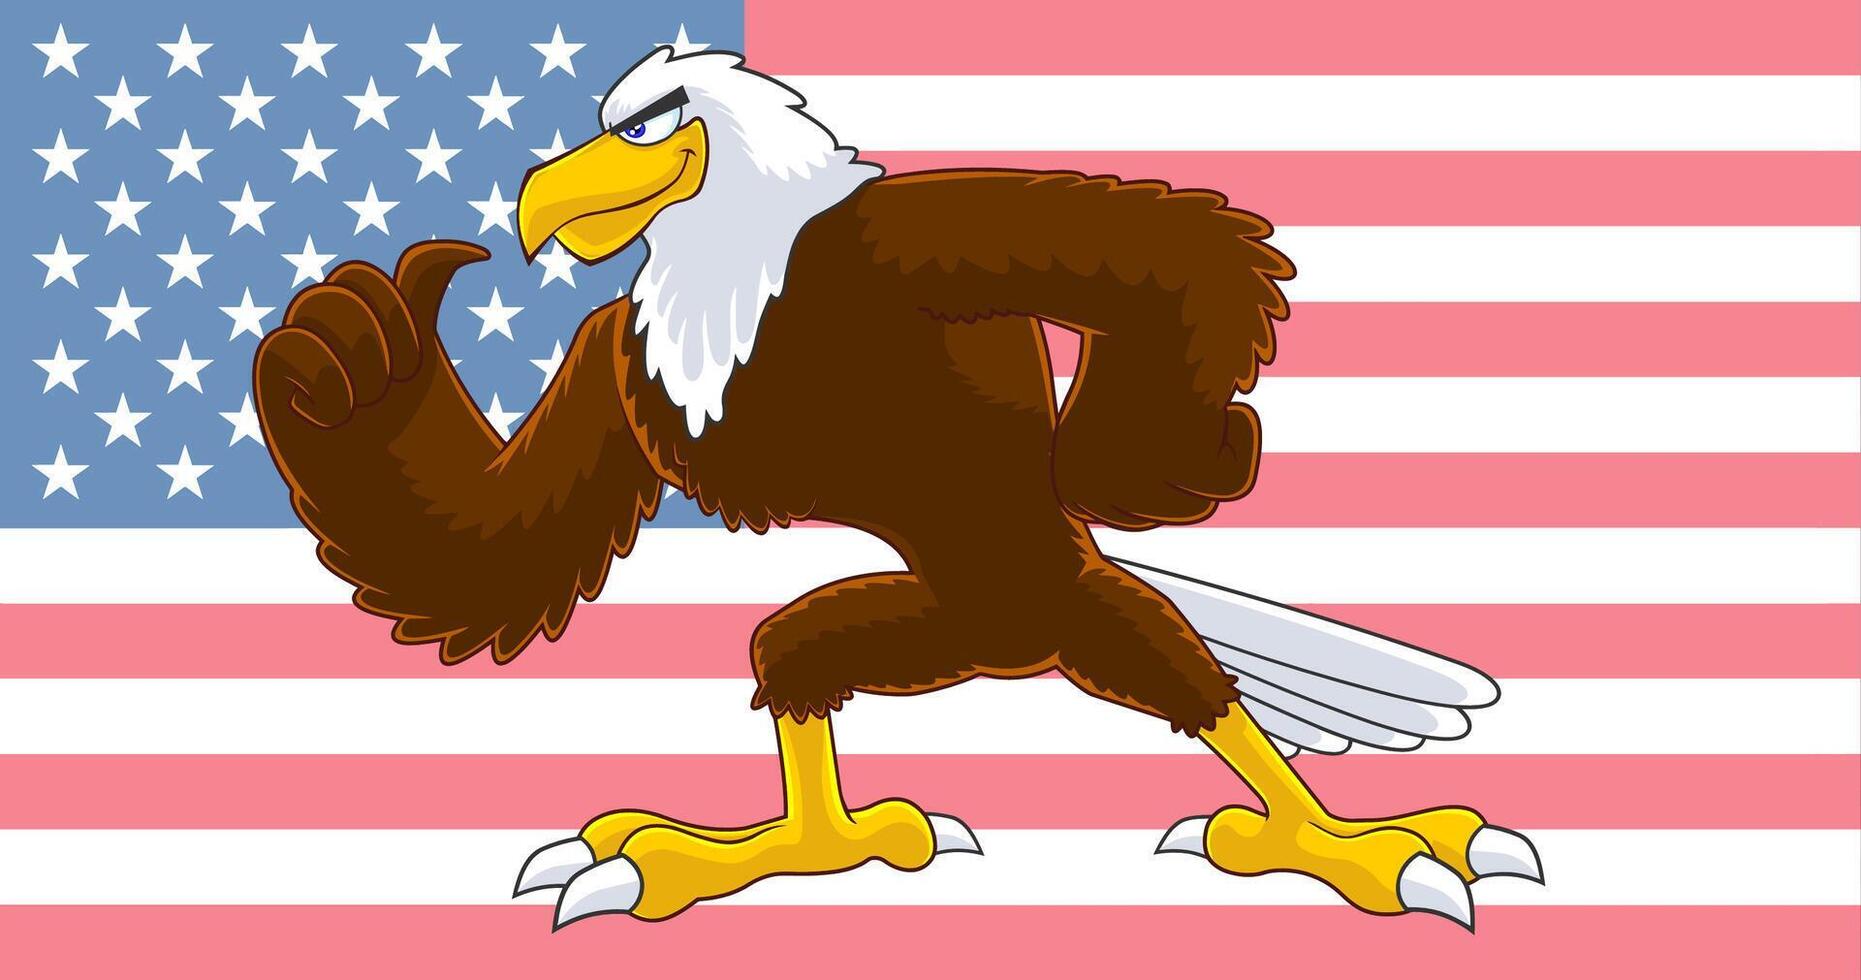 Adler Vogel Karikatur Charakter Über amerikanisch Flagge. Vektor Illustration mit Hintergrund